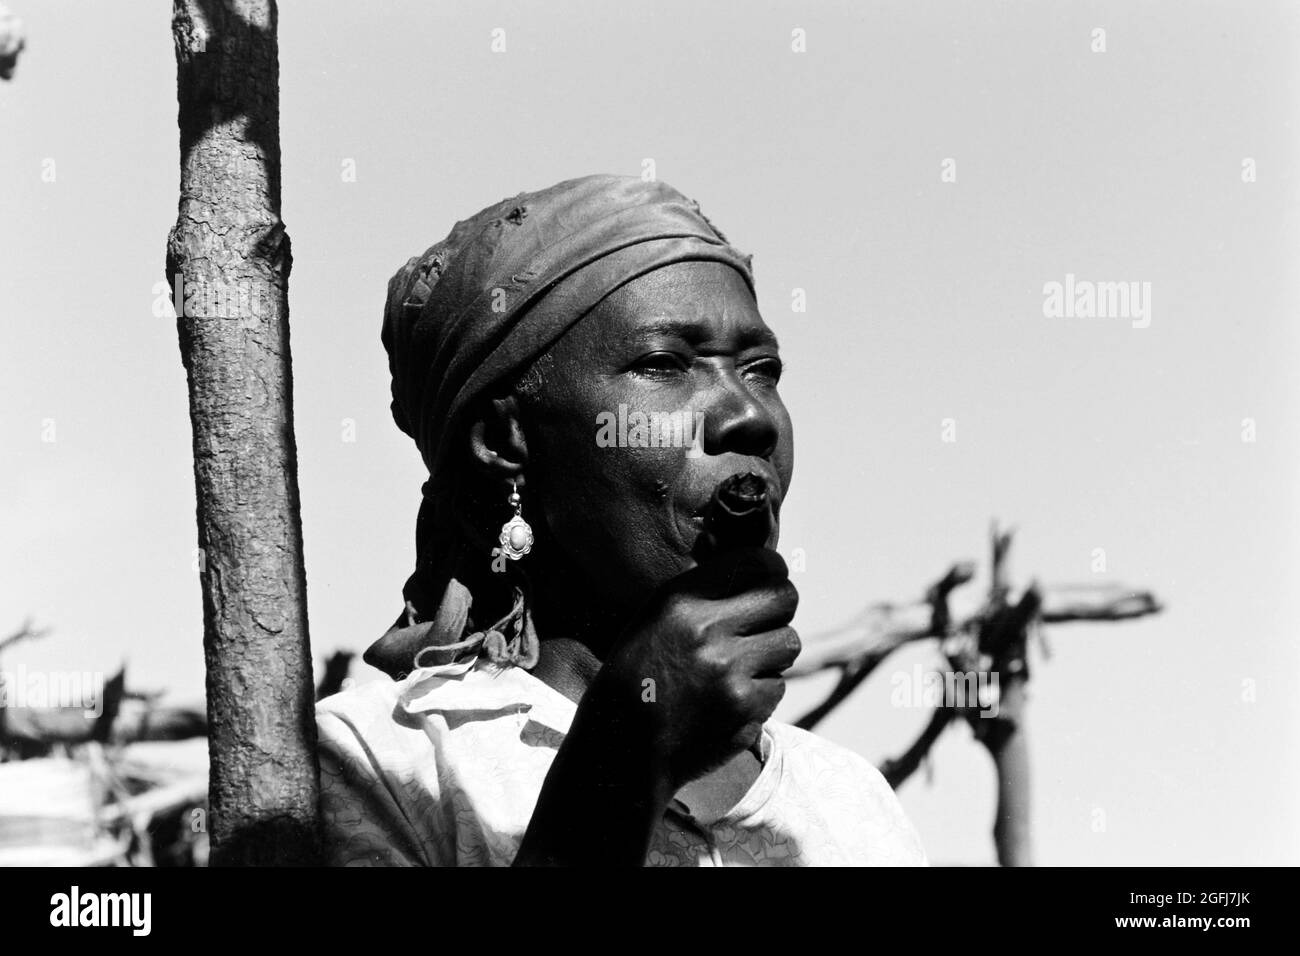 Pfeife rauchende Haïtianerin, 1967. Femme haïtienne fumant son pipe, 1967. Banque D'Images